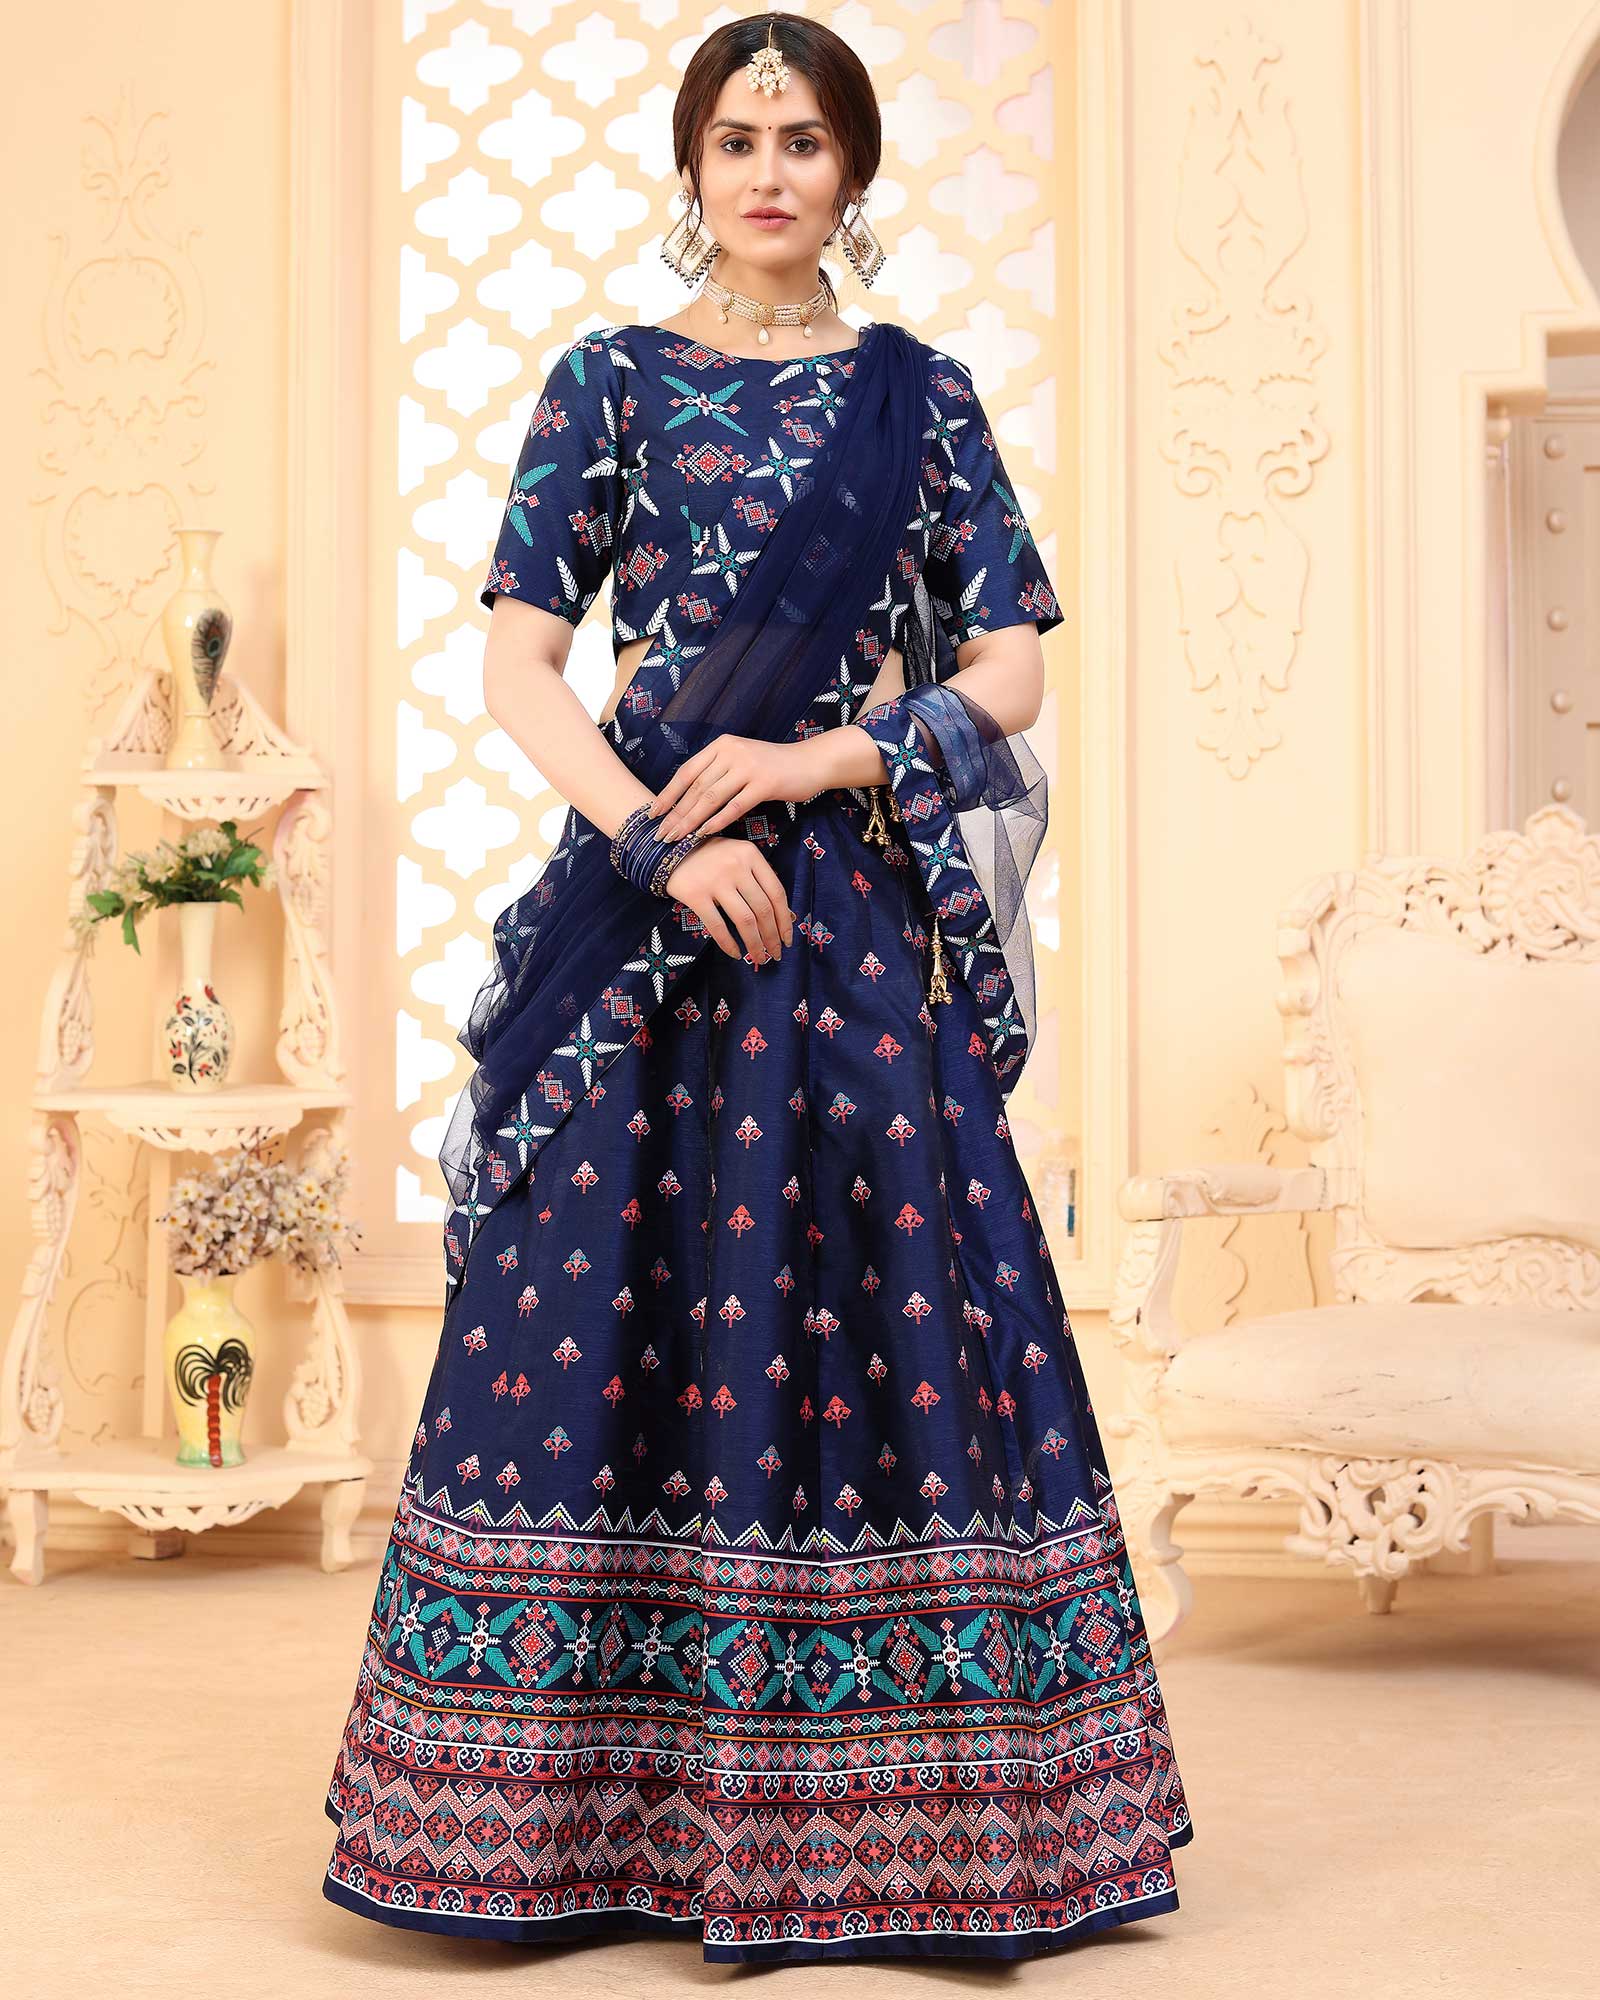 Bridal Wear Silk Designer Lehenga Choli By MS TRENDS 31 New Designs